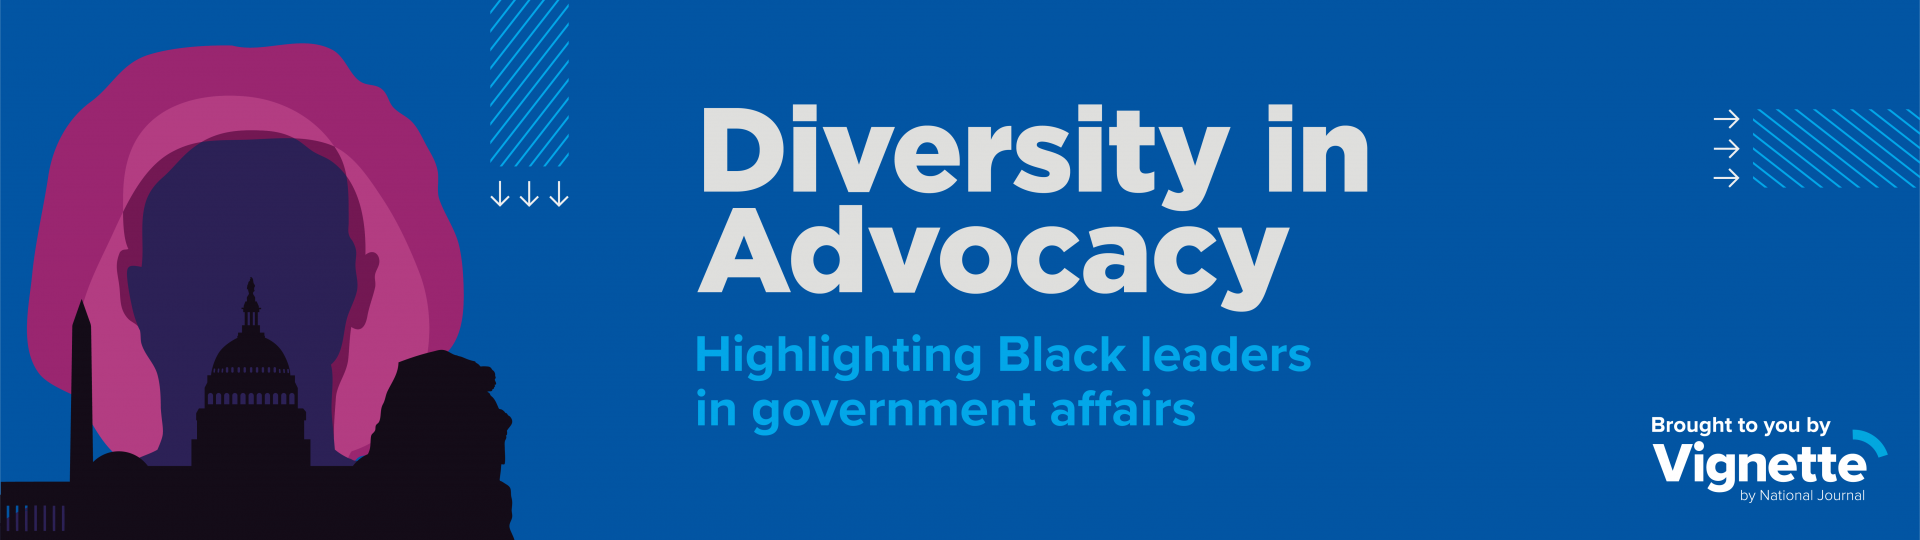 Diversity in Advocacy